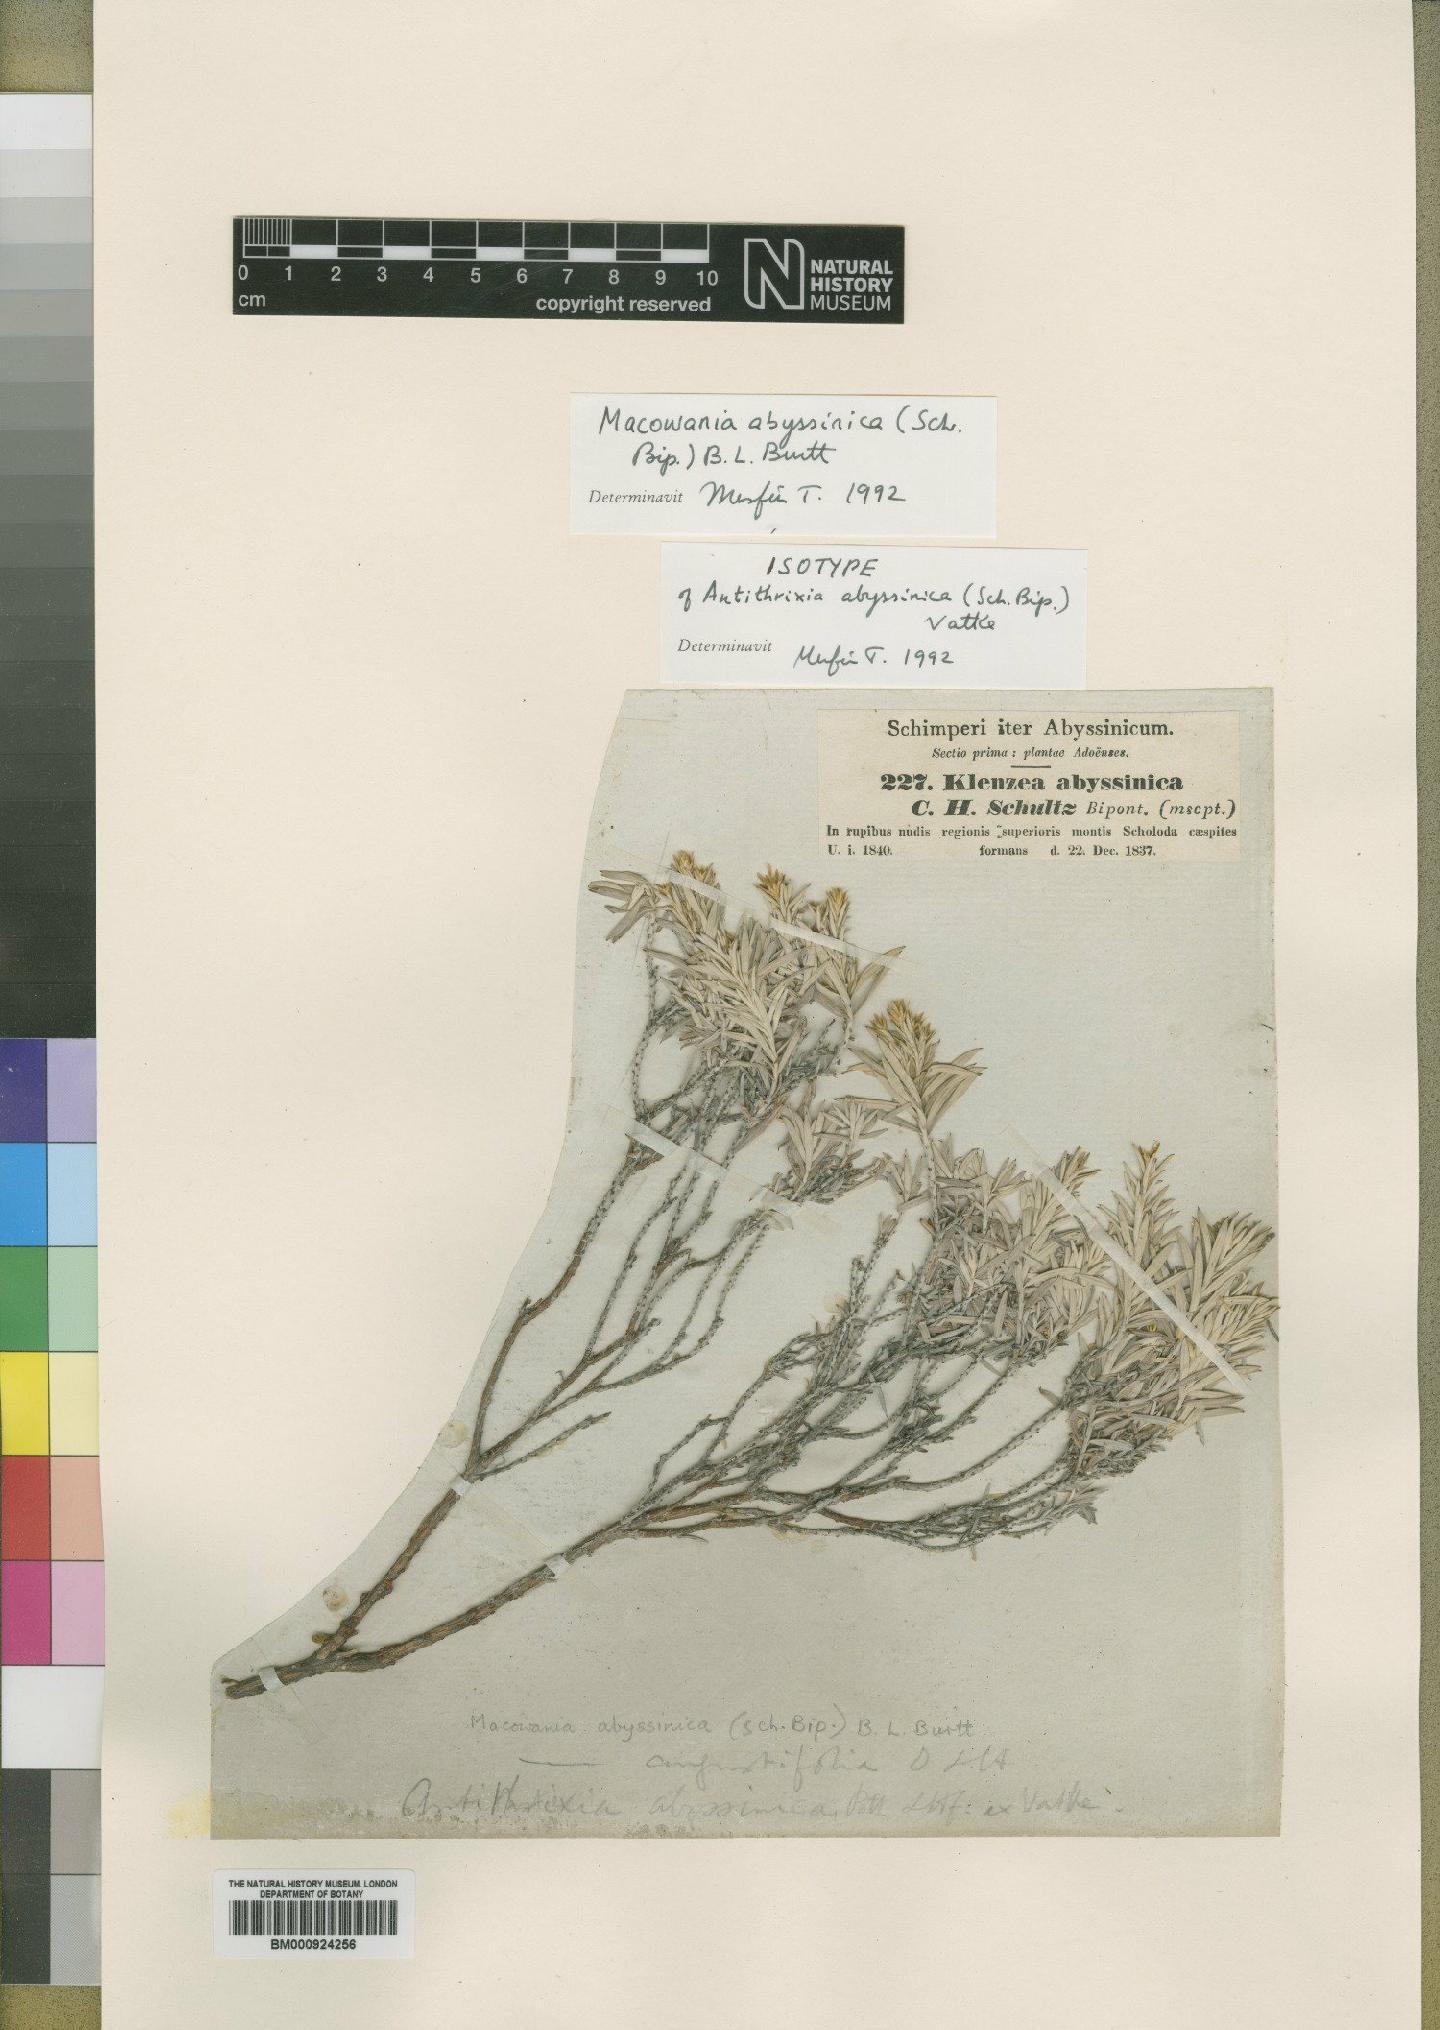 To NHMUK collection (Macowania abyssinica (Sch.Bip.) Burtt; Isotype; NHMUK:ecatalogue:4529284)